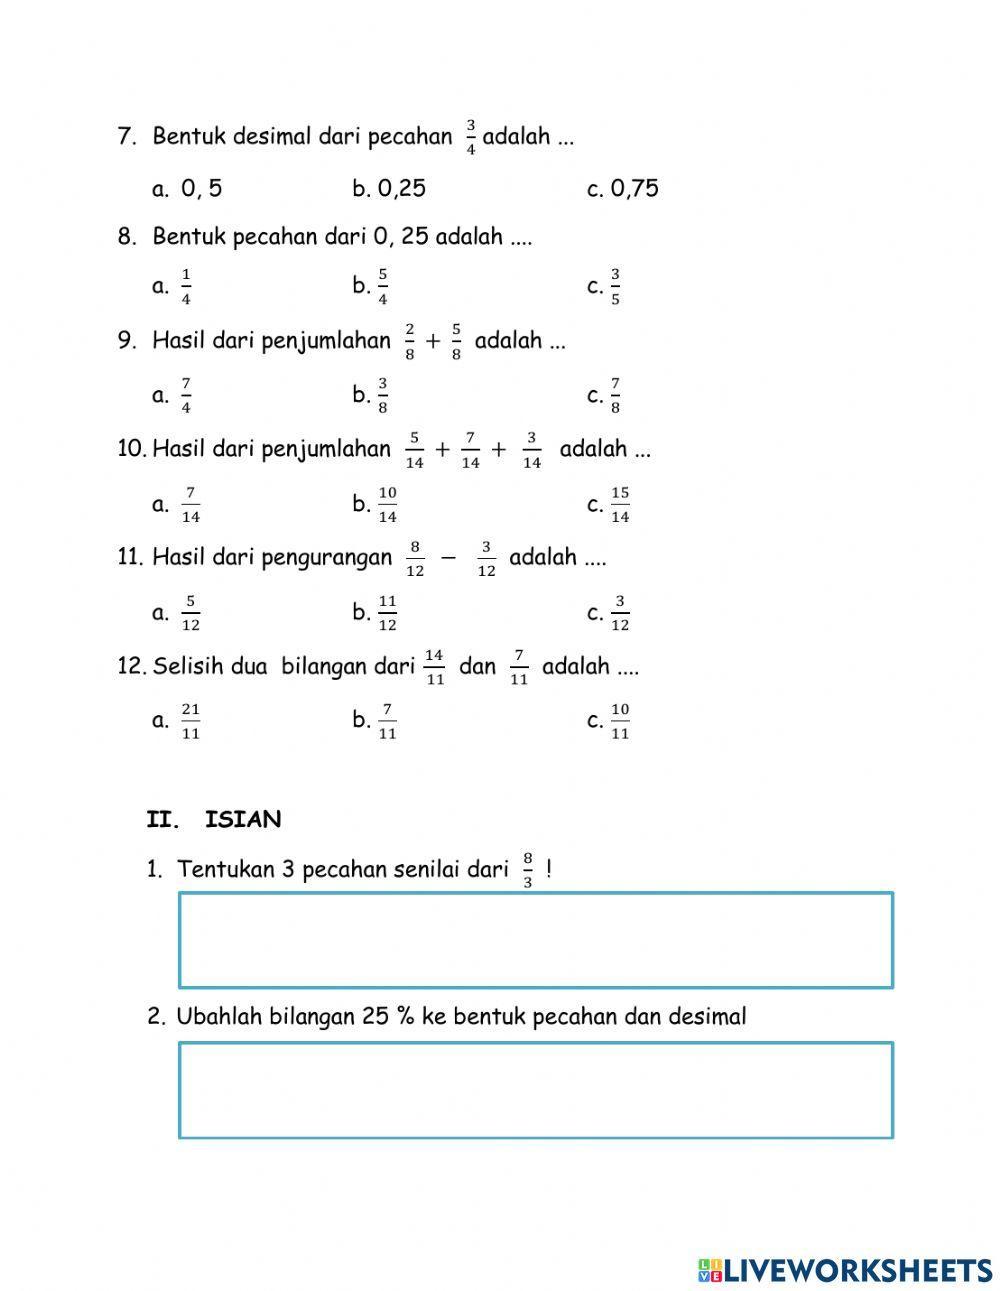 Evaluasi modul 1 matematika kelas 4